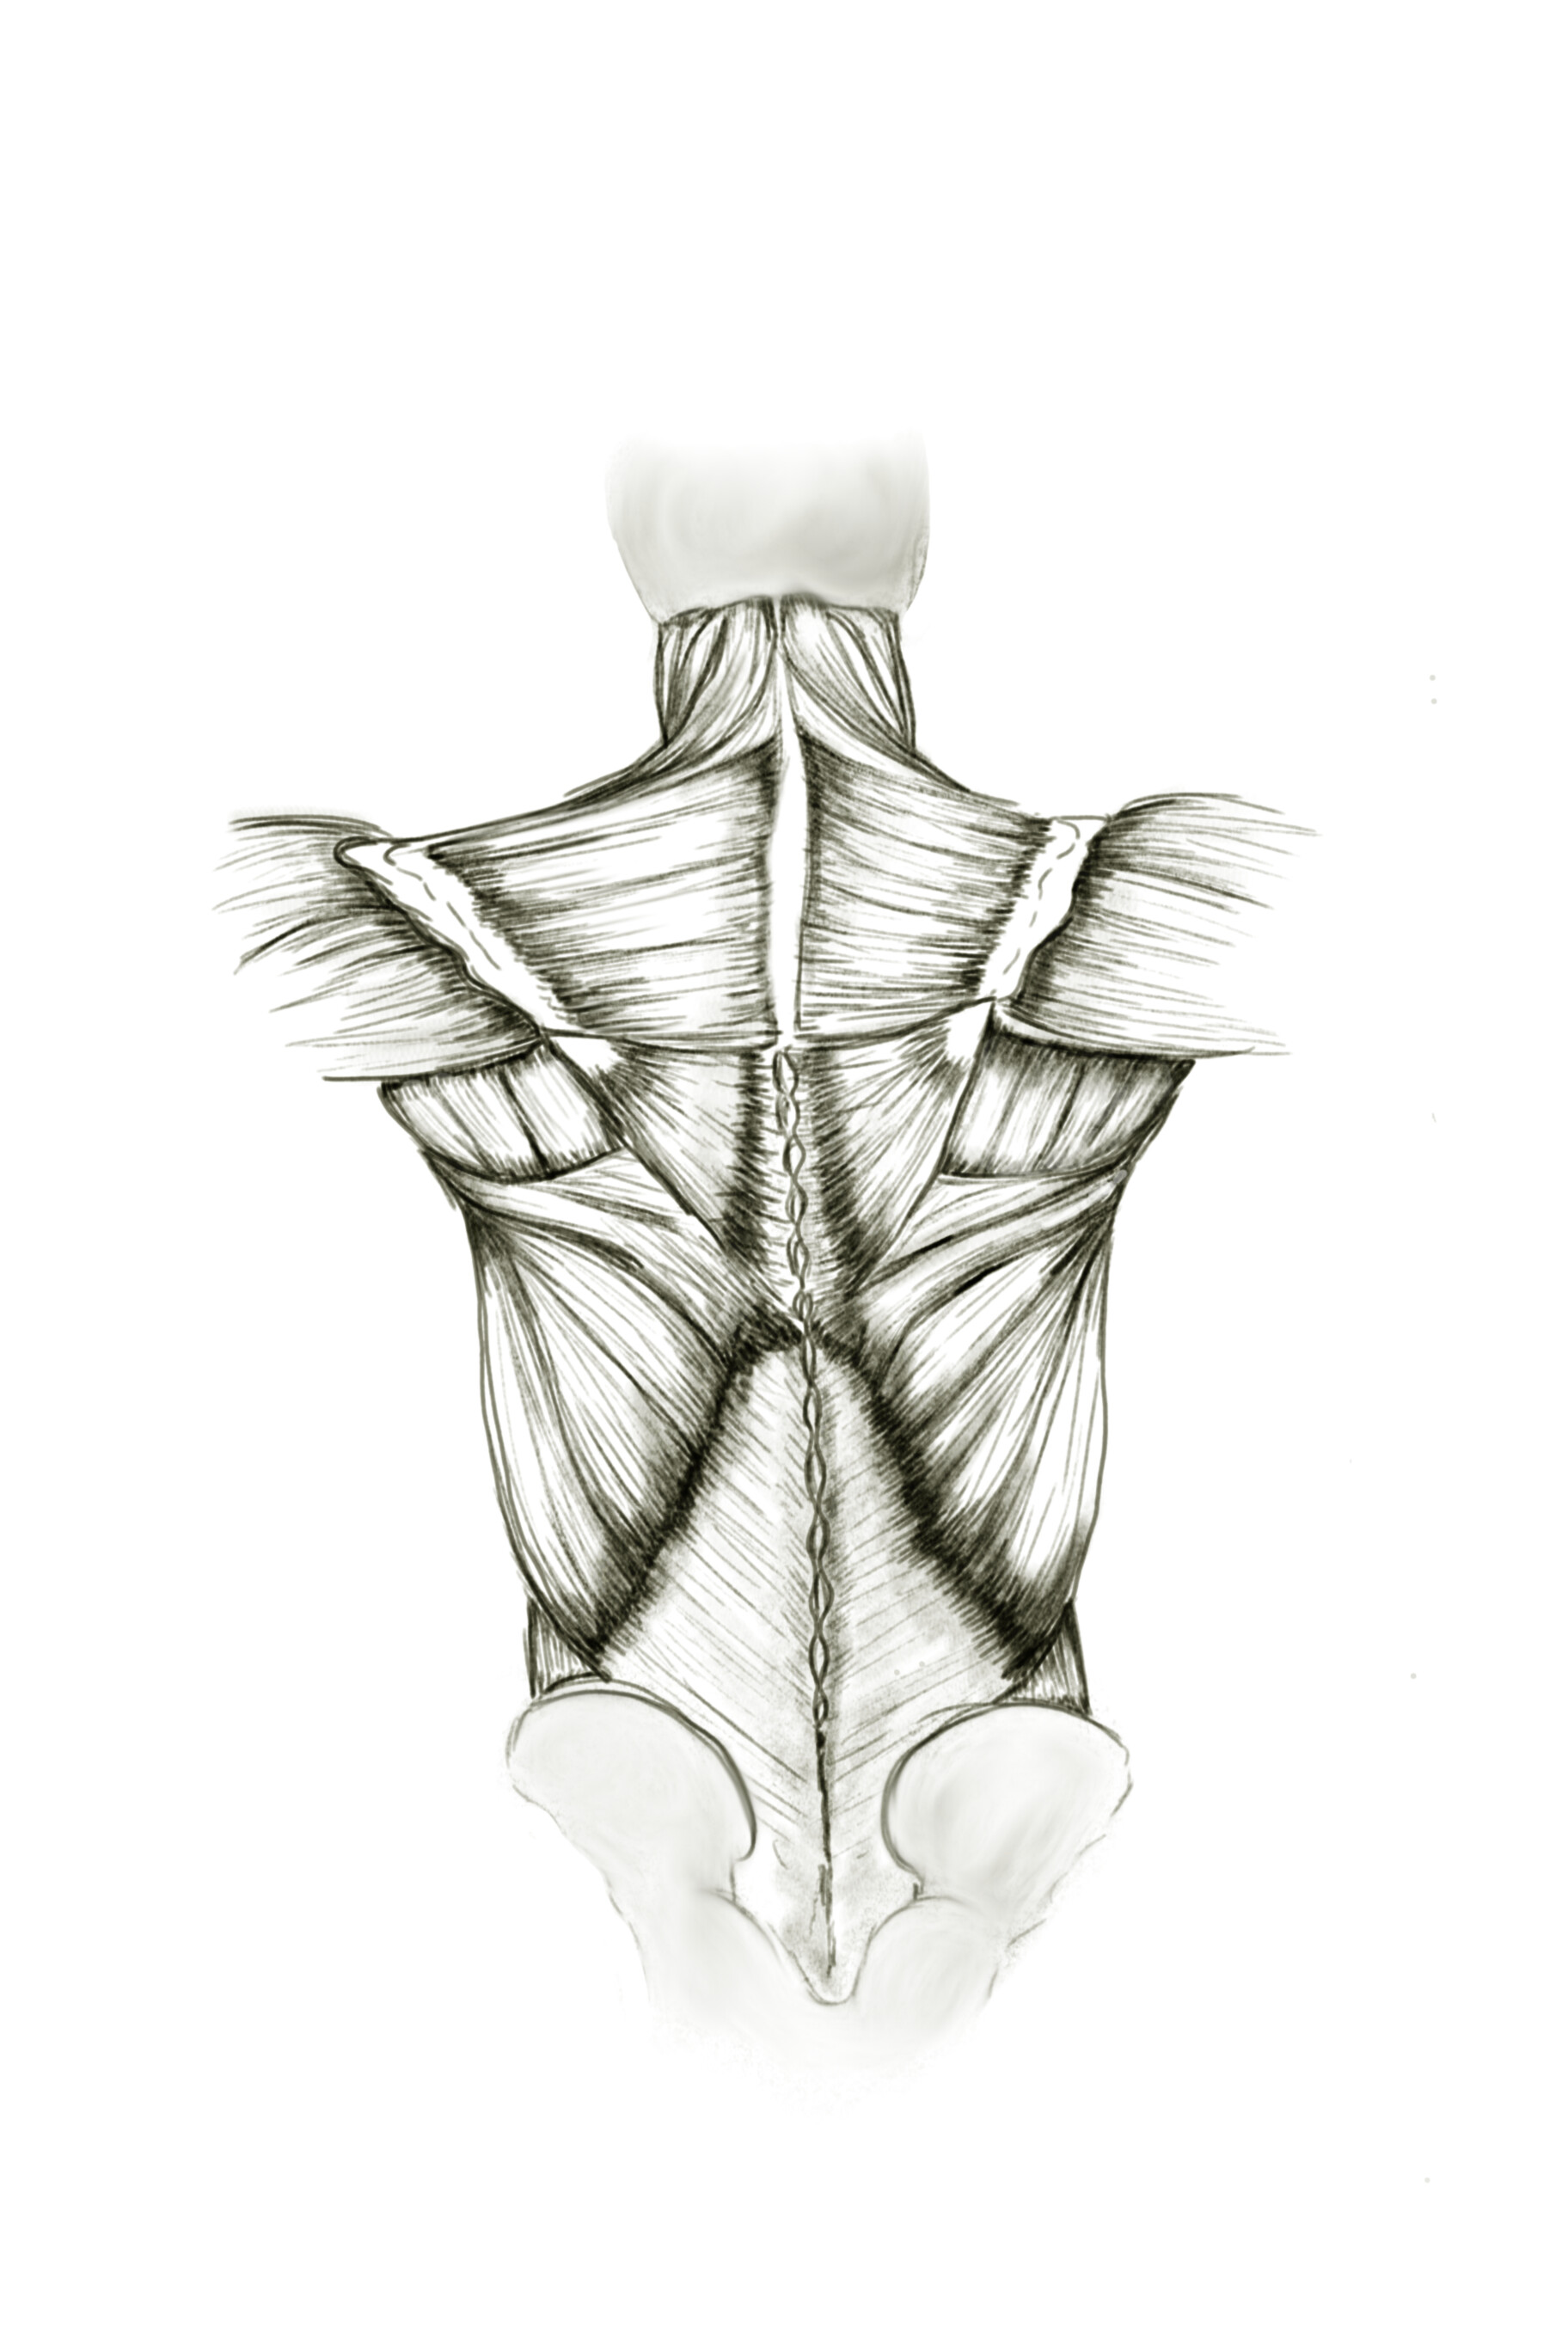 ArtStation - Muscular Anatomy of the Back